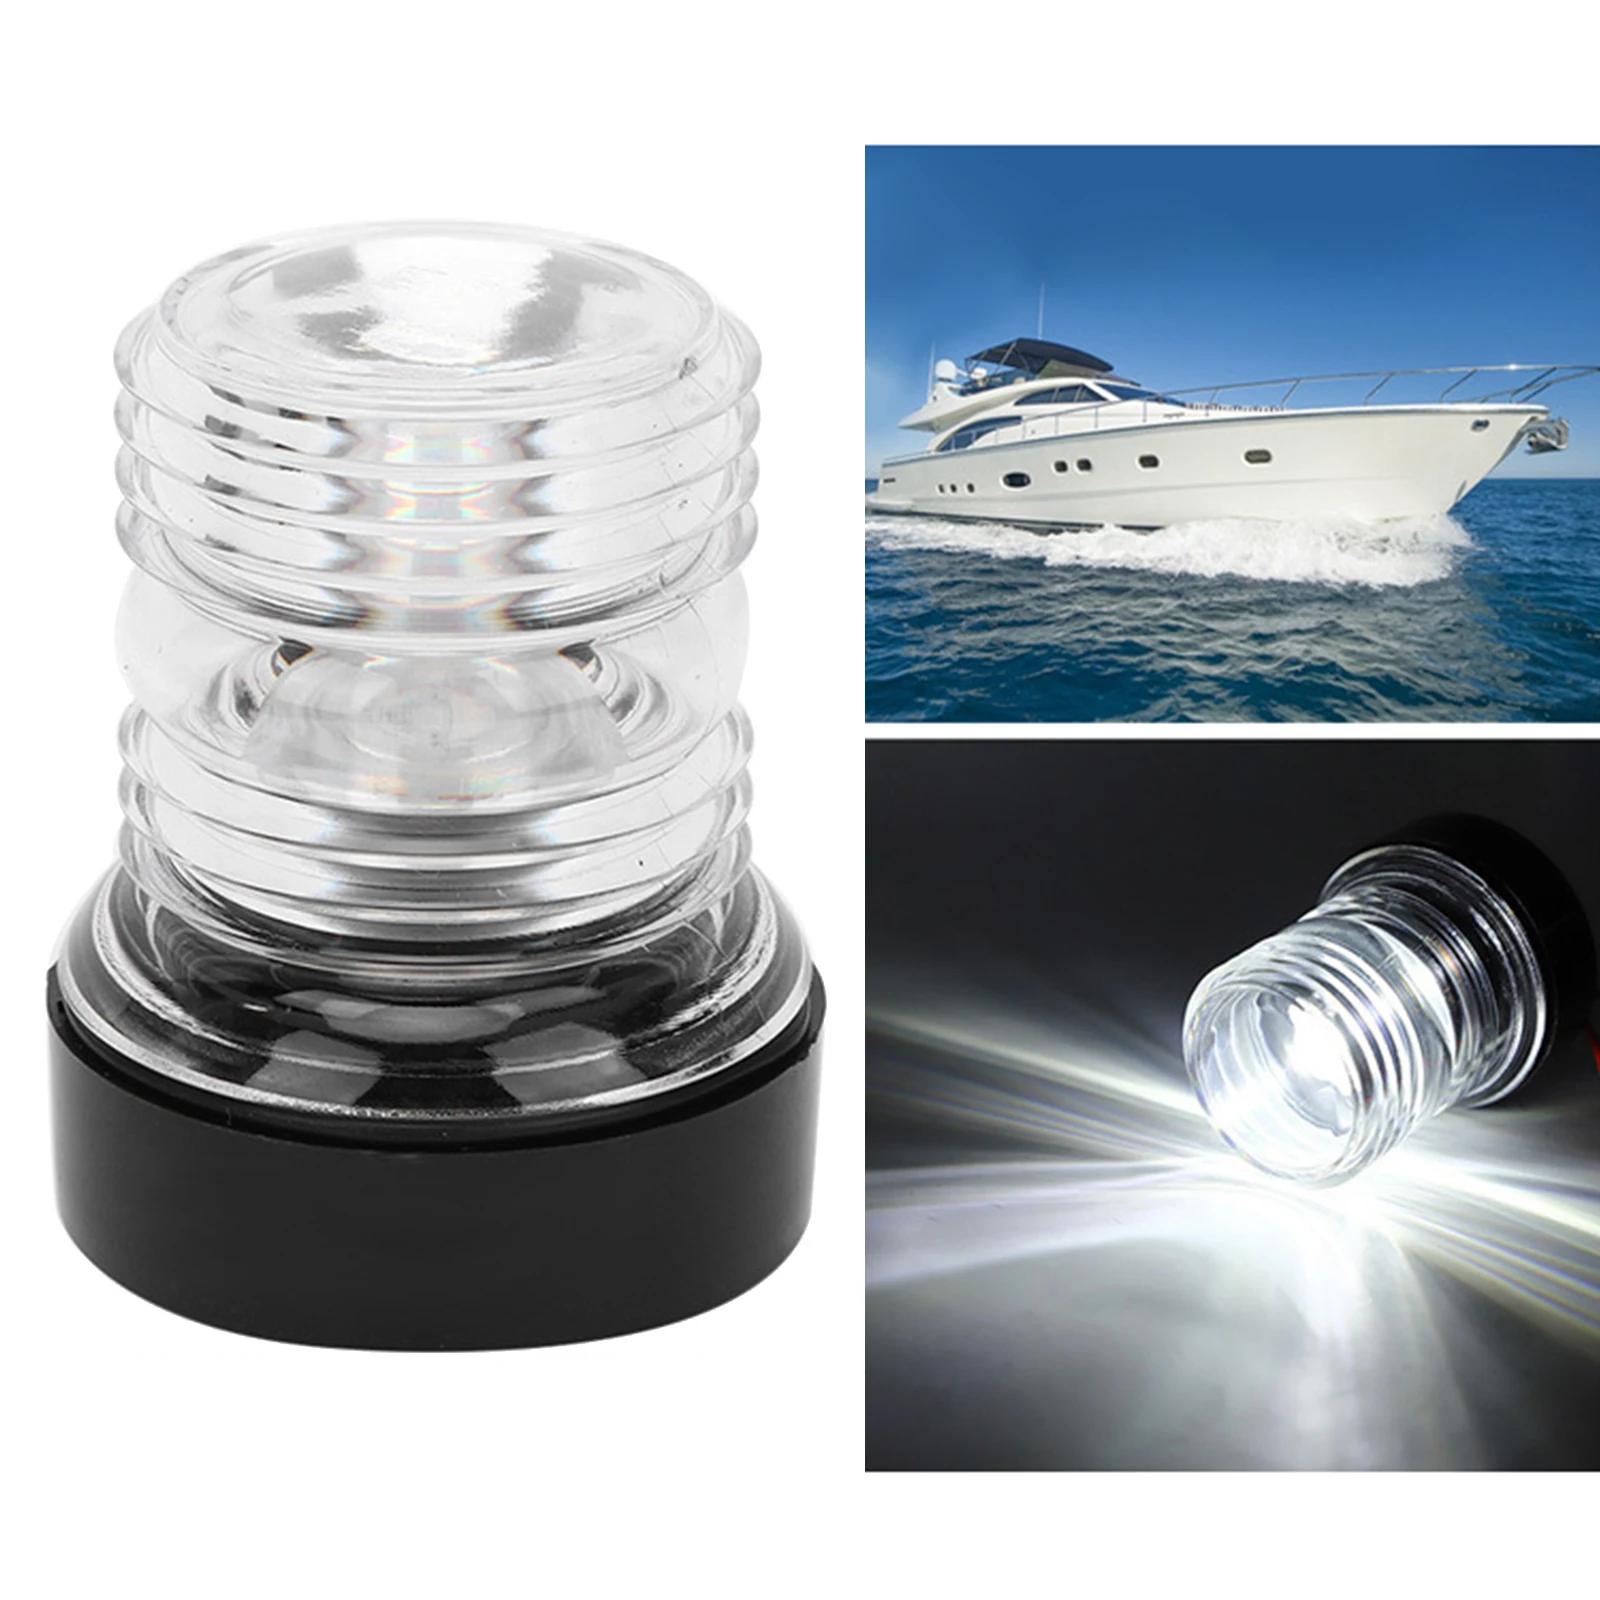 Durable Yacht Anchor Light Marine Boat All Round Stern Round 360 Navigation Lamp Super Bright Pontoon 12-24V Lights